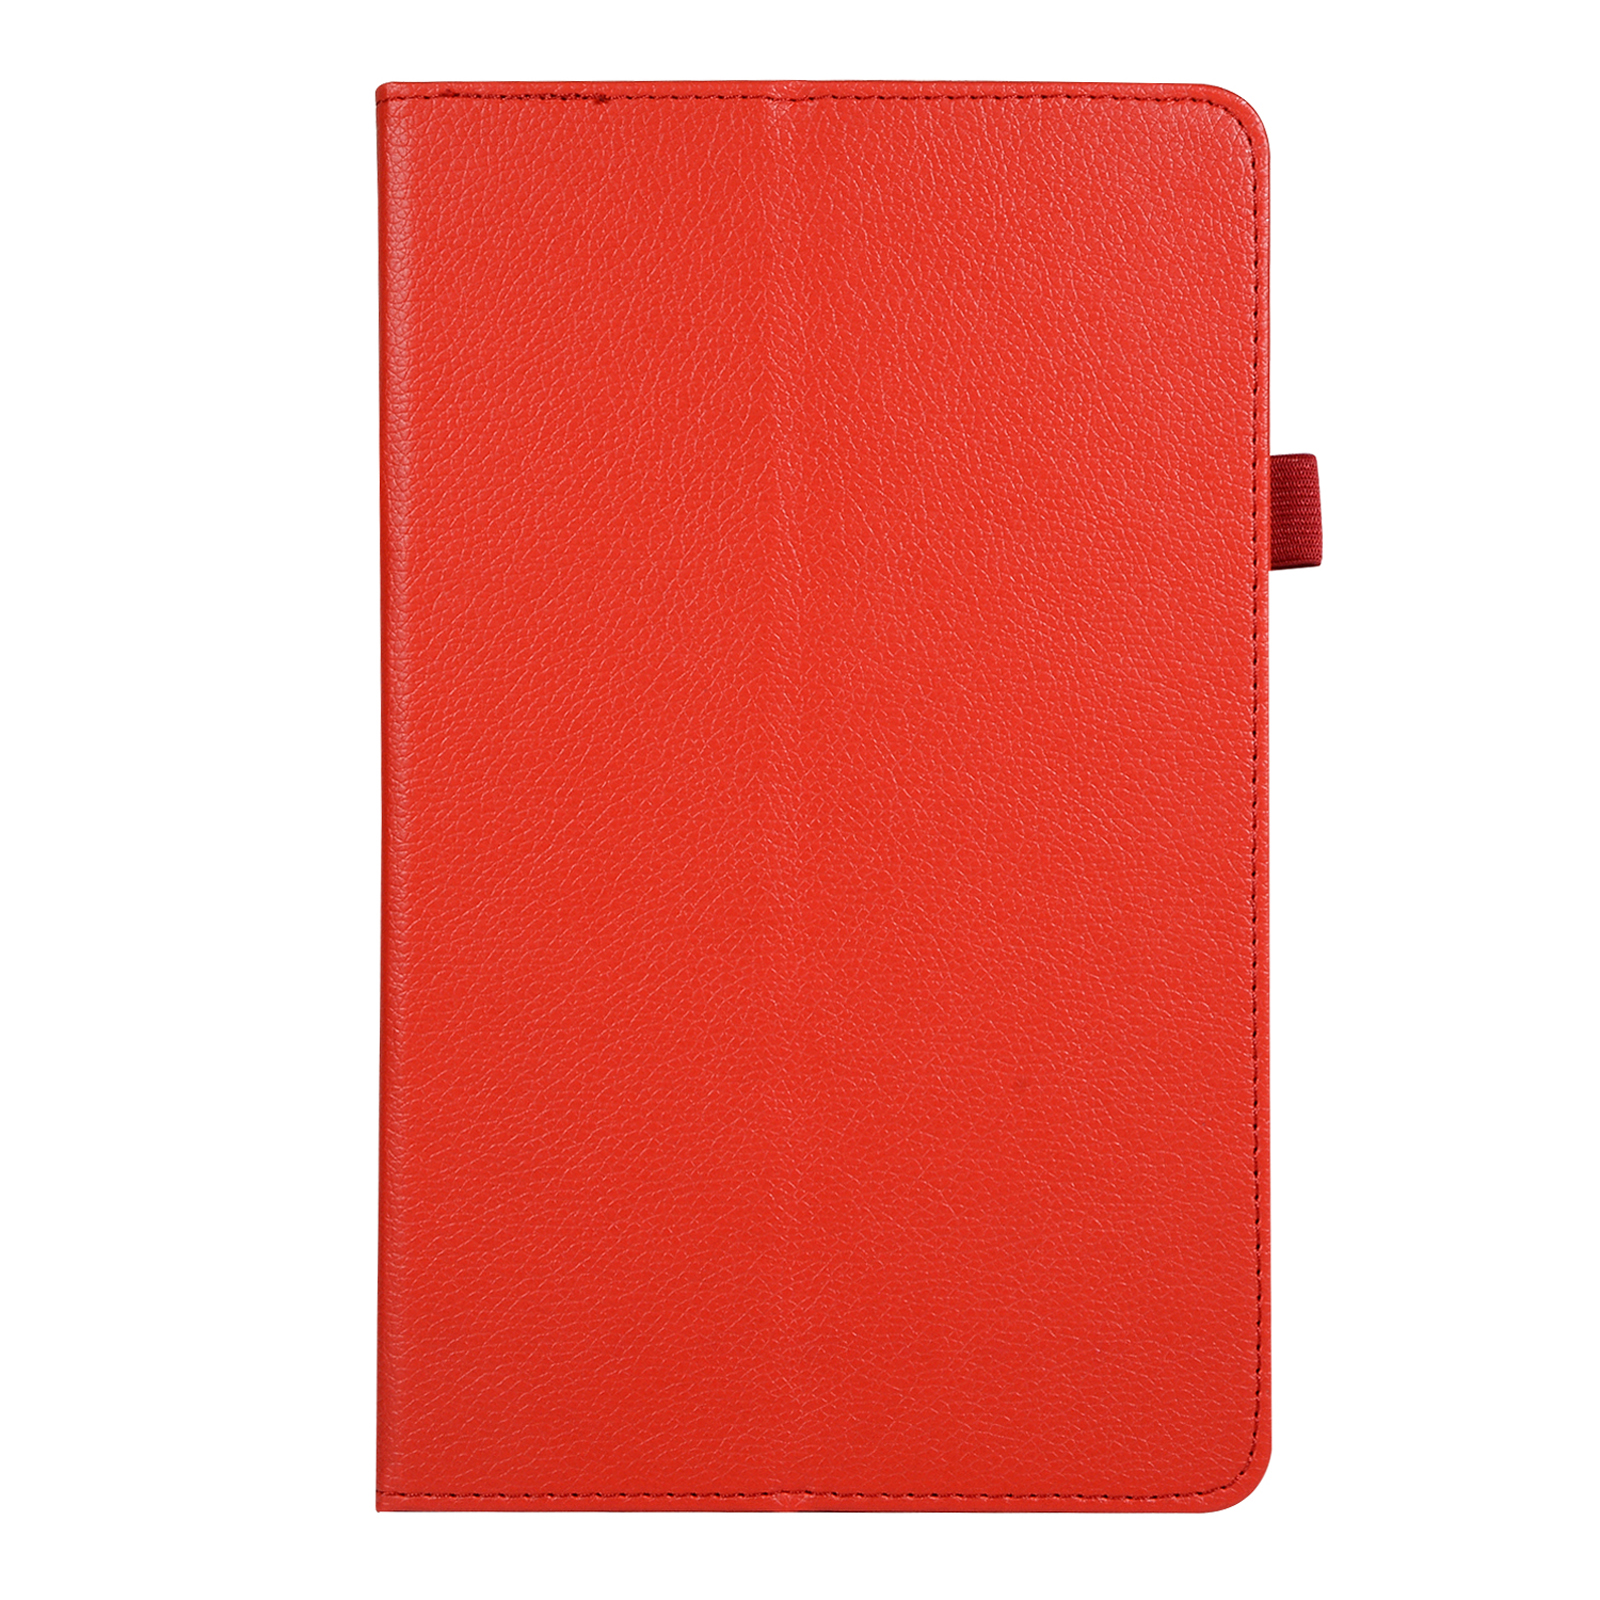 Hülle SM-T510 Kunstleder, Galaxy A LOBWERK Rot Samsung Schutzhülle Bookcover Zoll 10.1 10.1 Tab für